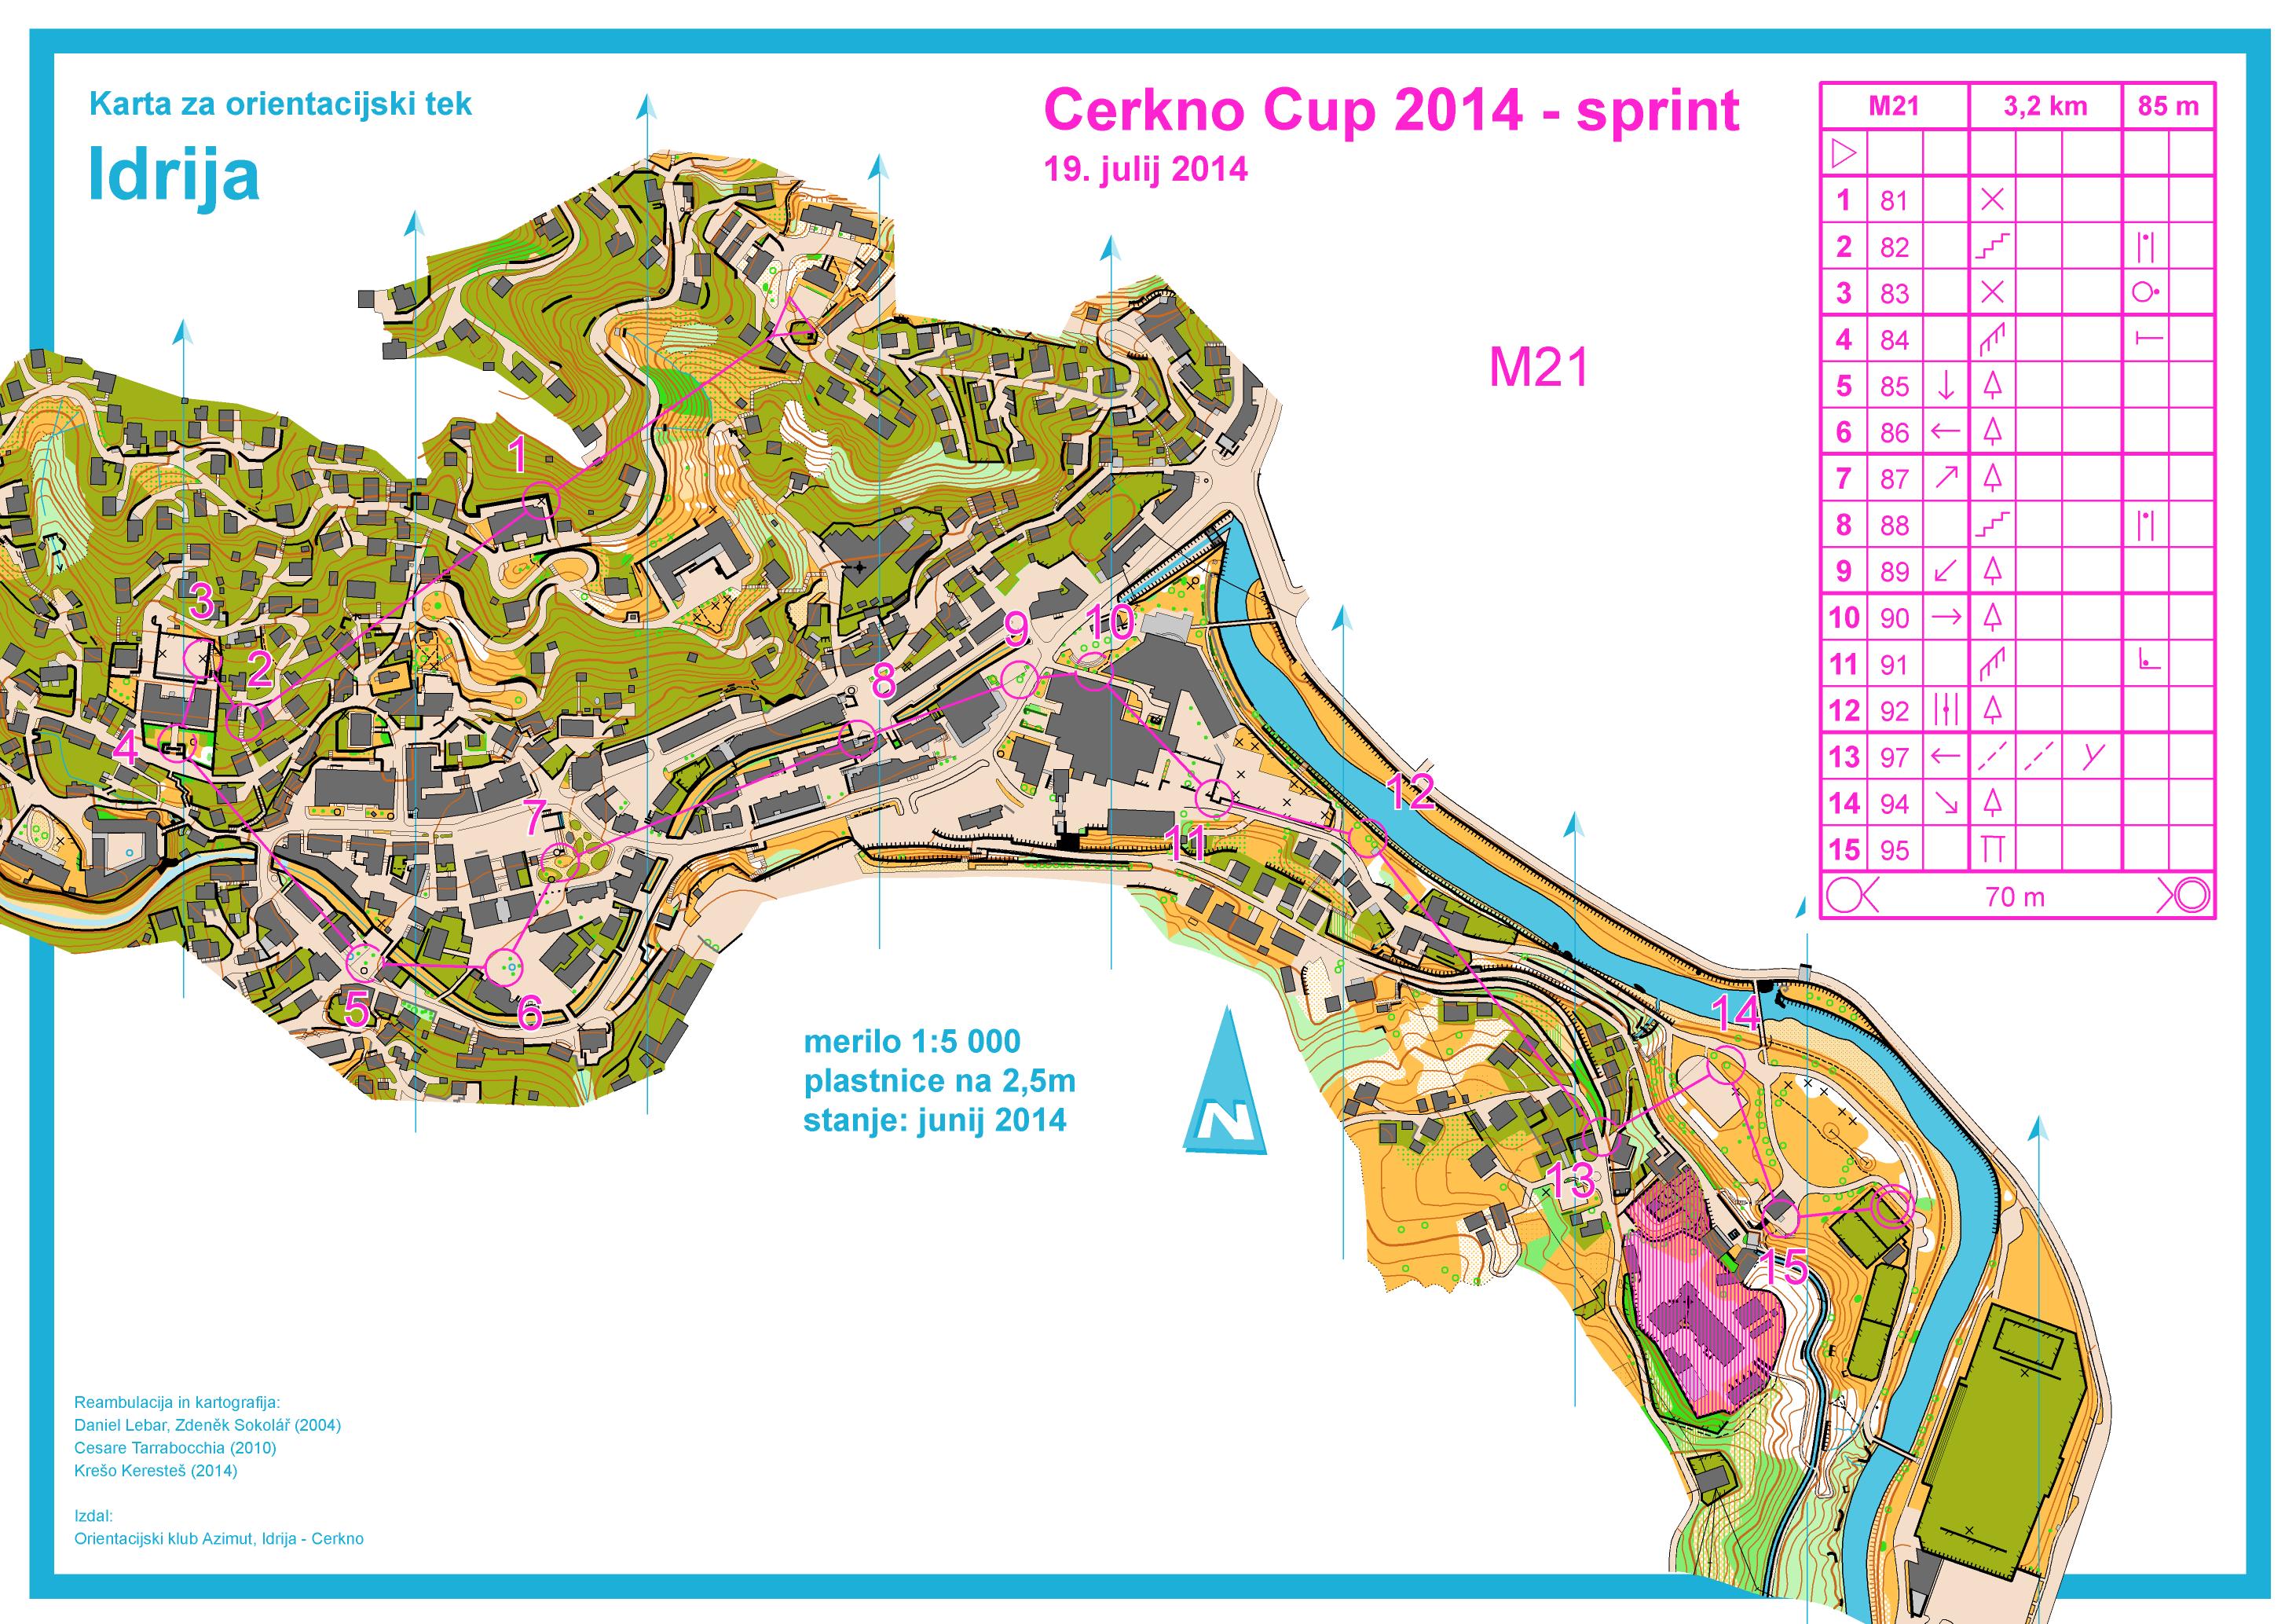 Cerkno Cup - Sprint (19/07/2014)